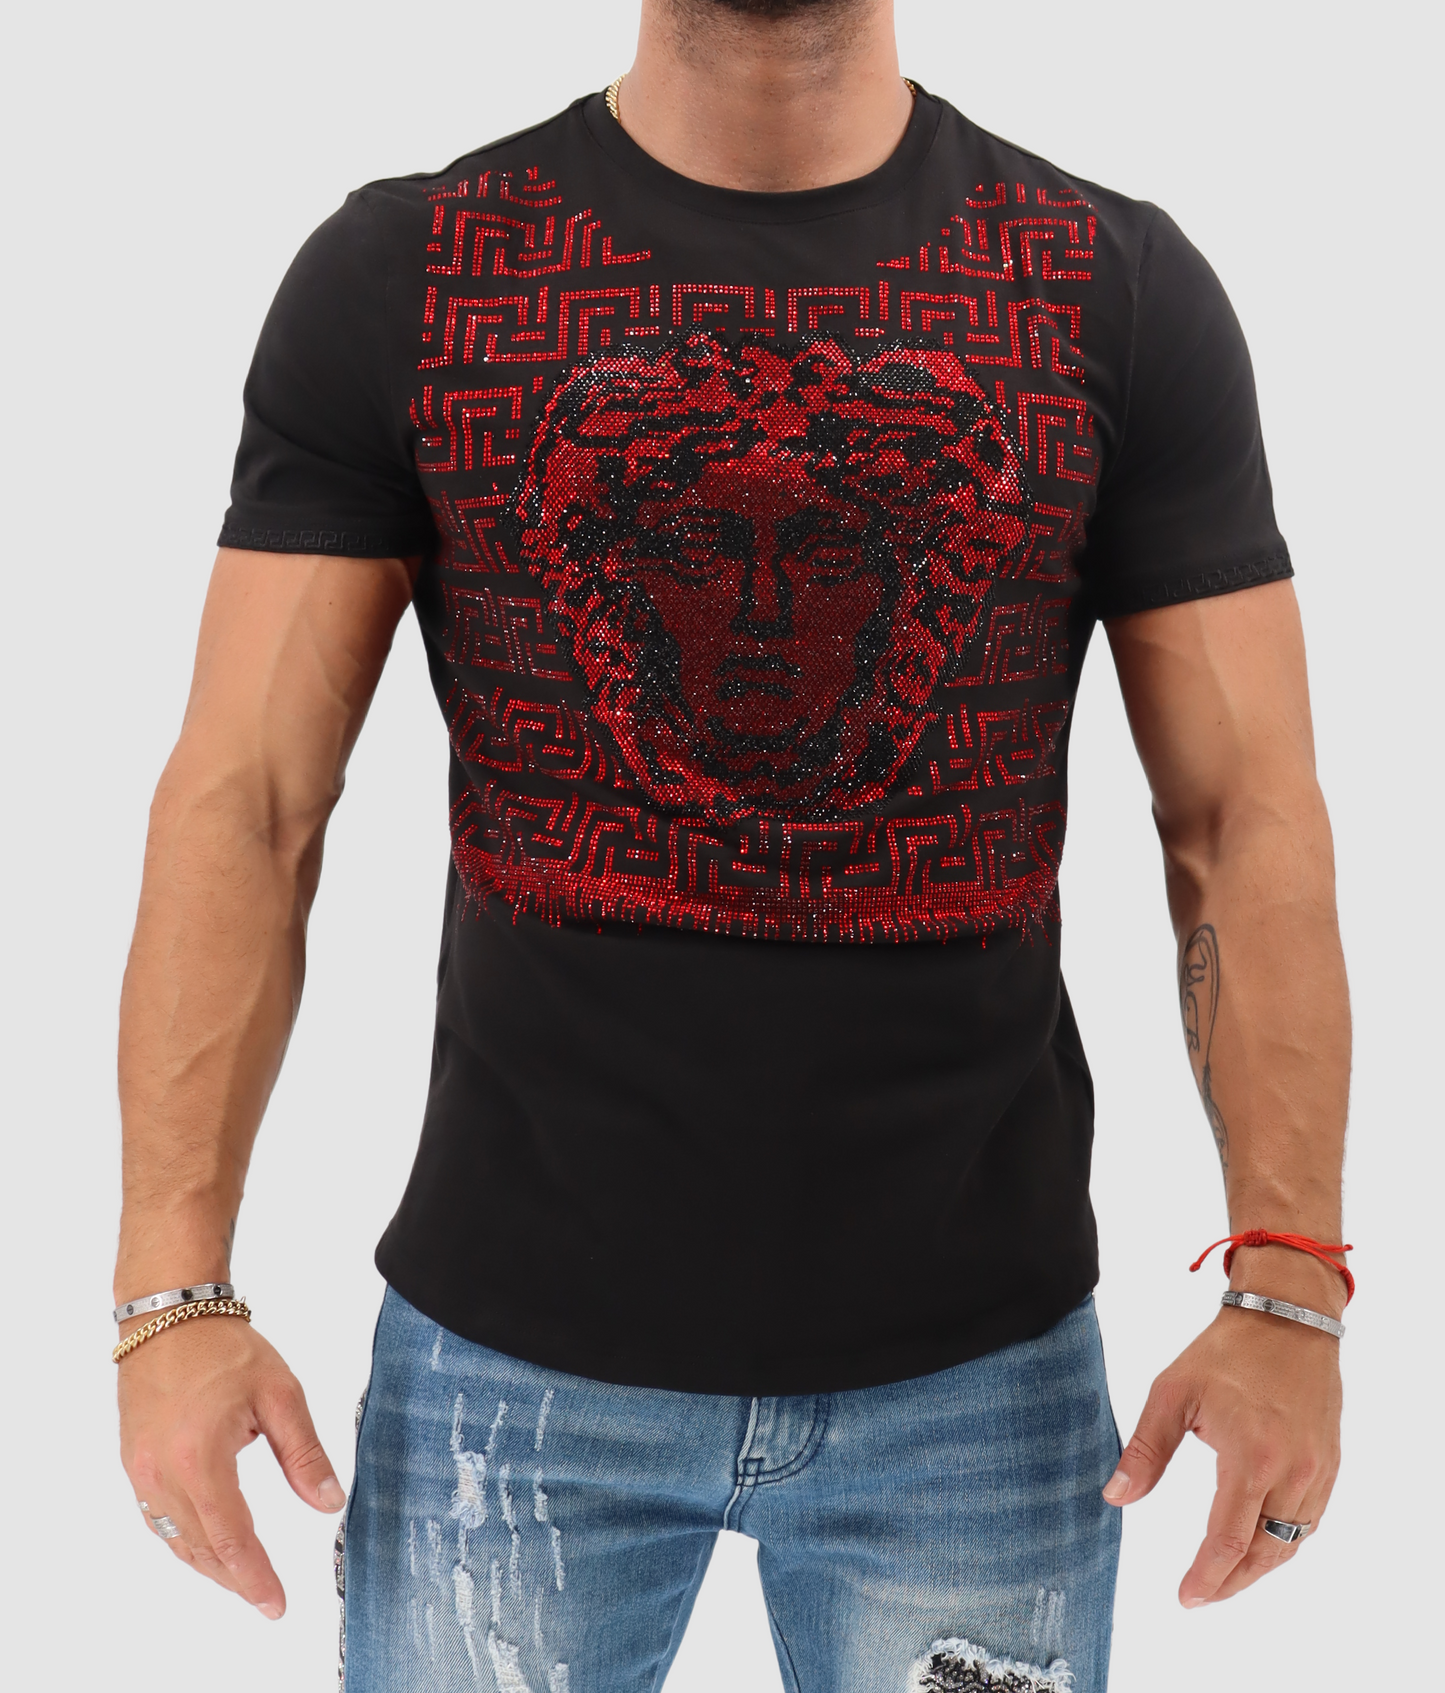 Laveritas Black/Red Medusa T-Shirt